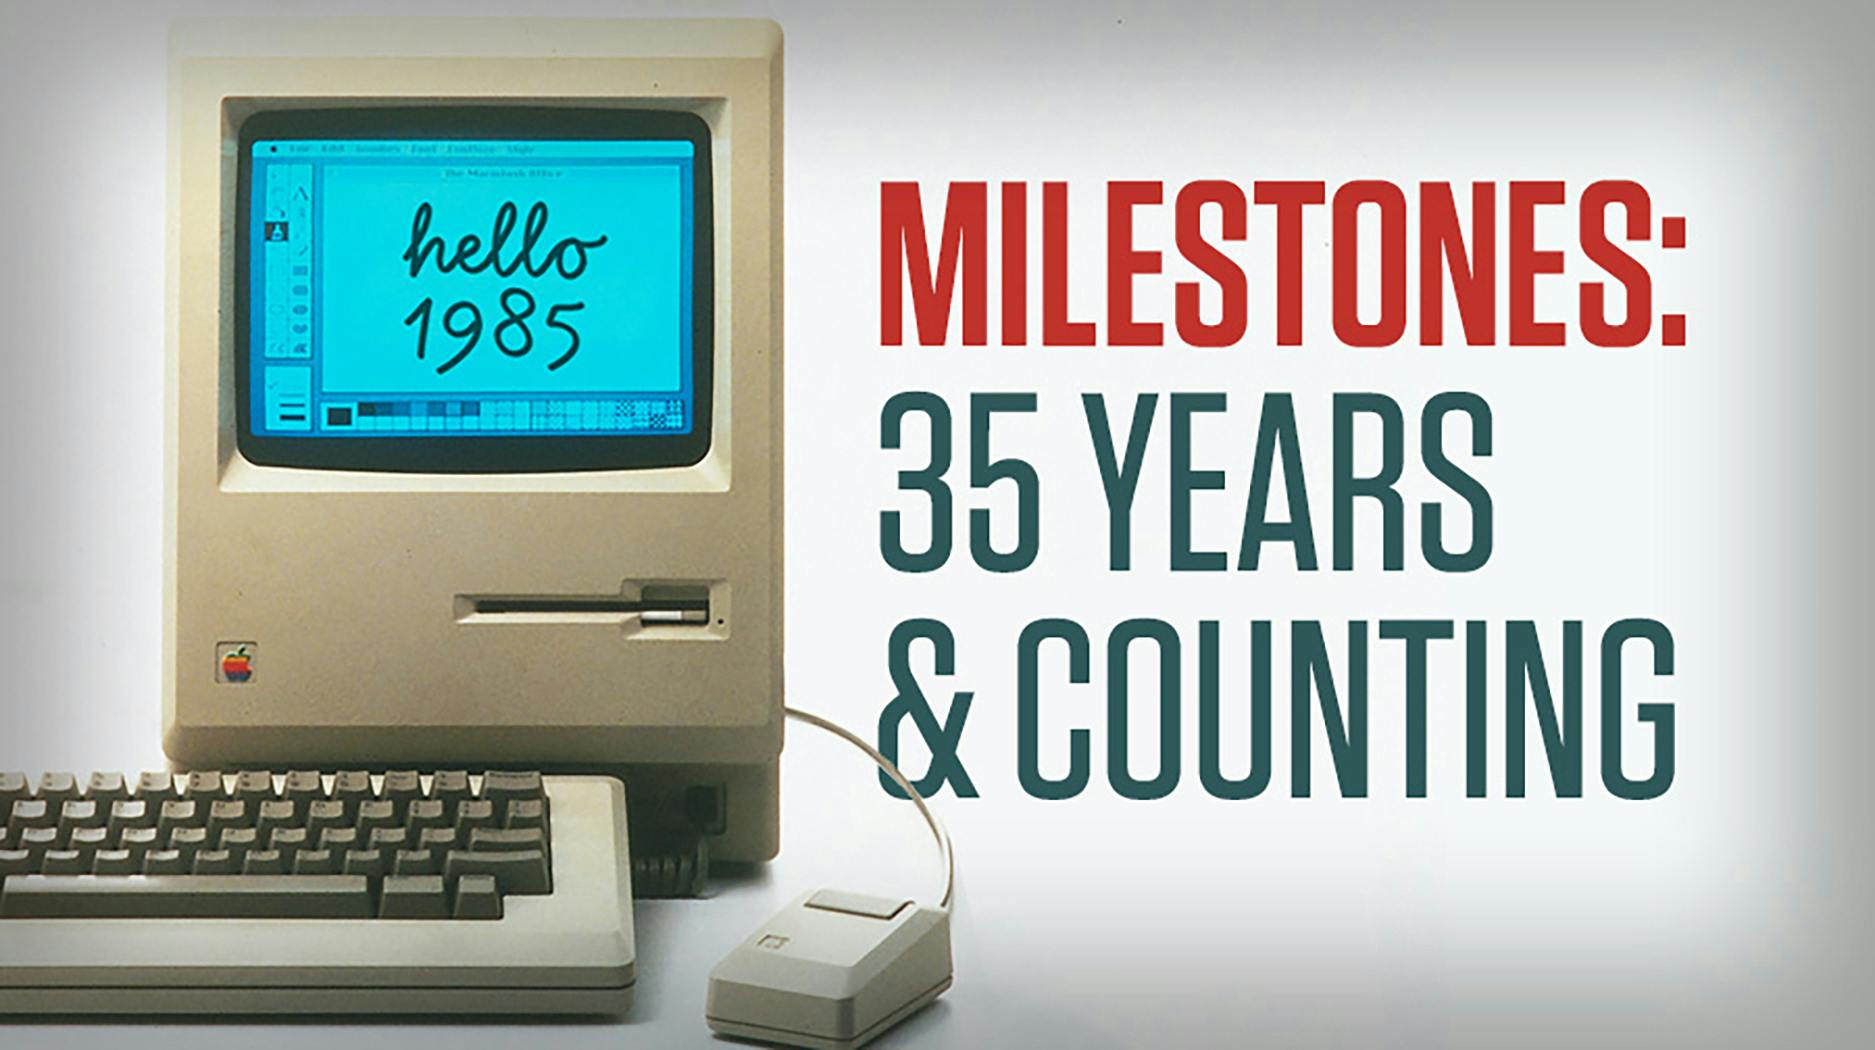 Milestones: 35 Years & Counting